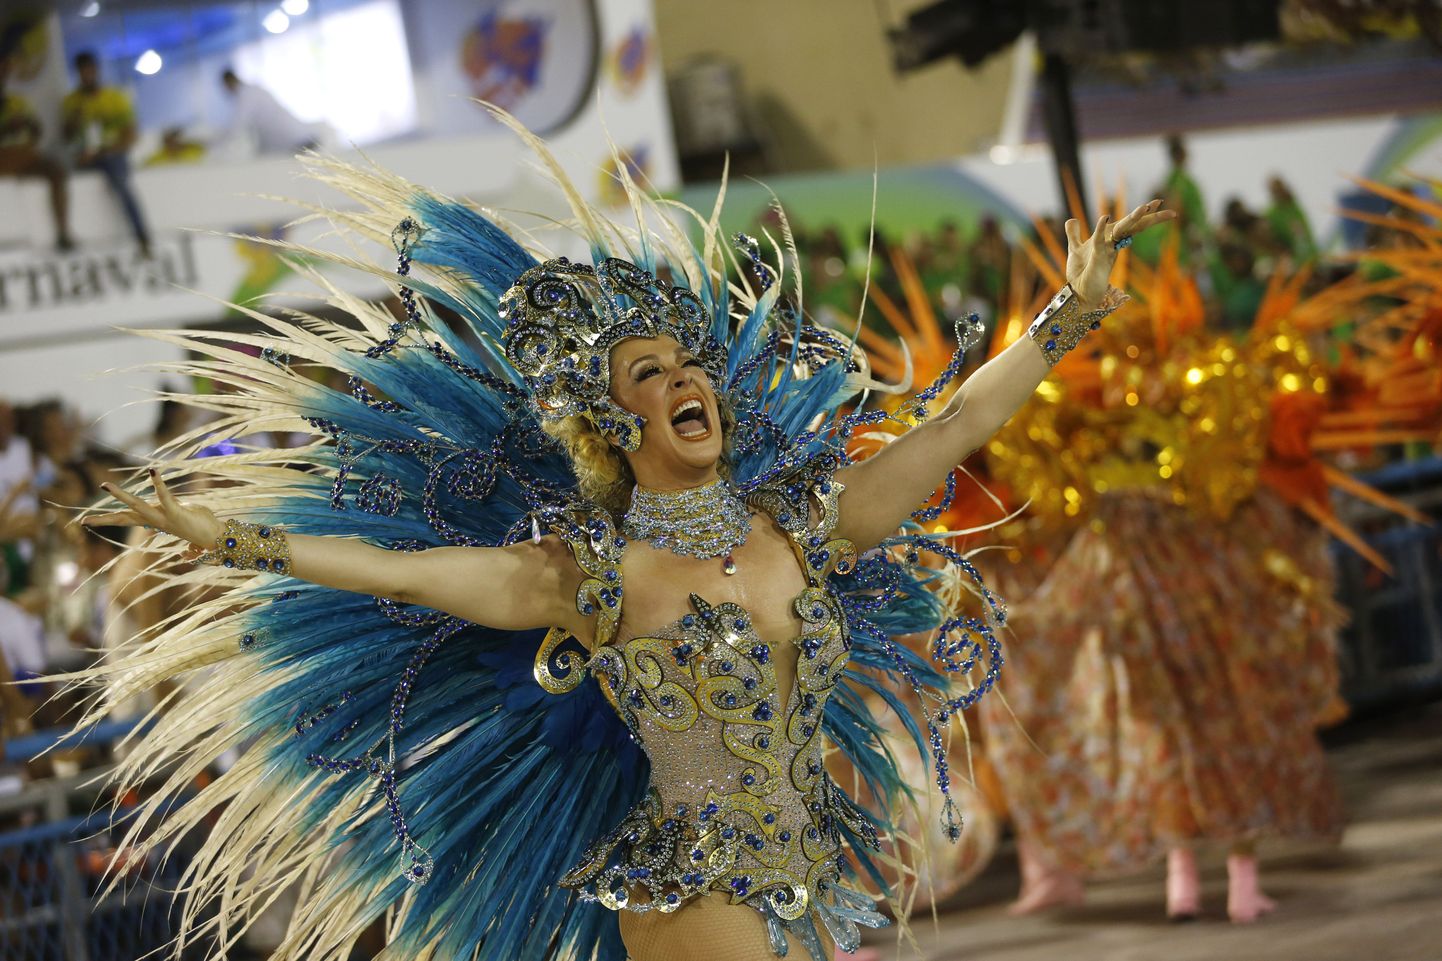 Performer from the Beija Flor samba school dances during carnival celebrations at the Sambadrome in Rio de Janeiro, Brazil, Monday, Feb. 8, 2016. (AP Photo/Silvia Izquierdo)